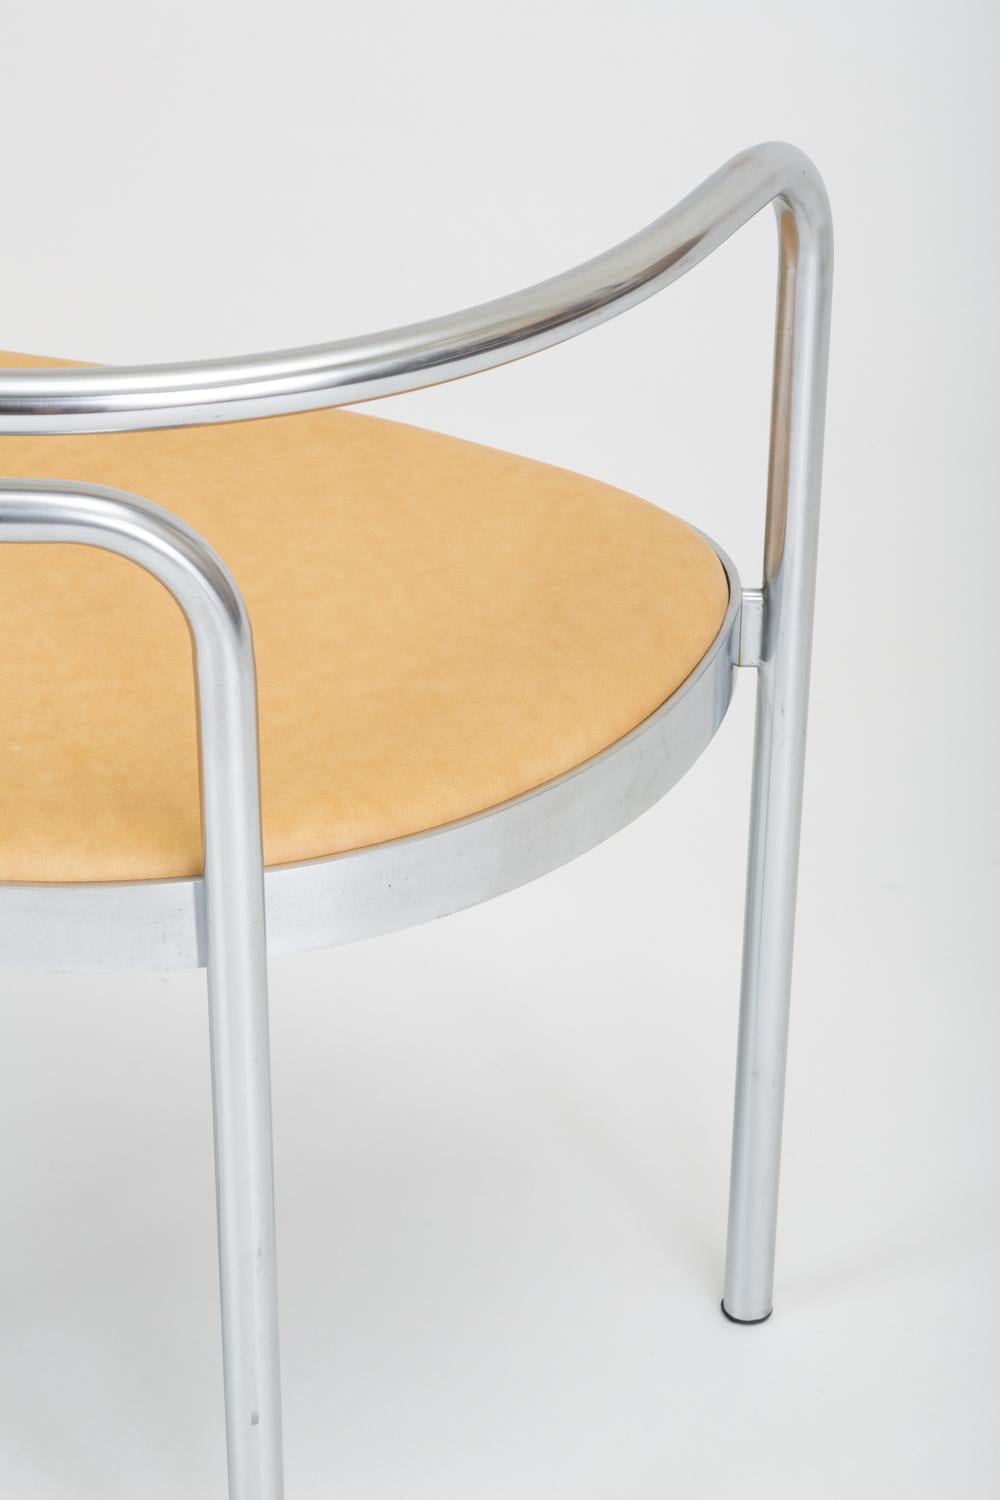 Single PK-12 Dining or Accent Chair by Poul Kjaerholm for E. Kold Christensen 9